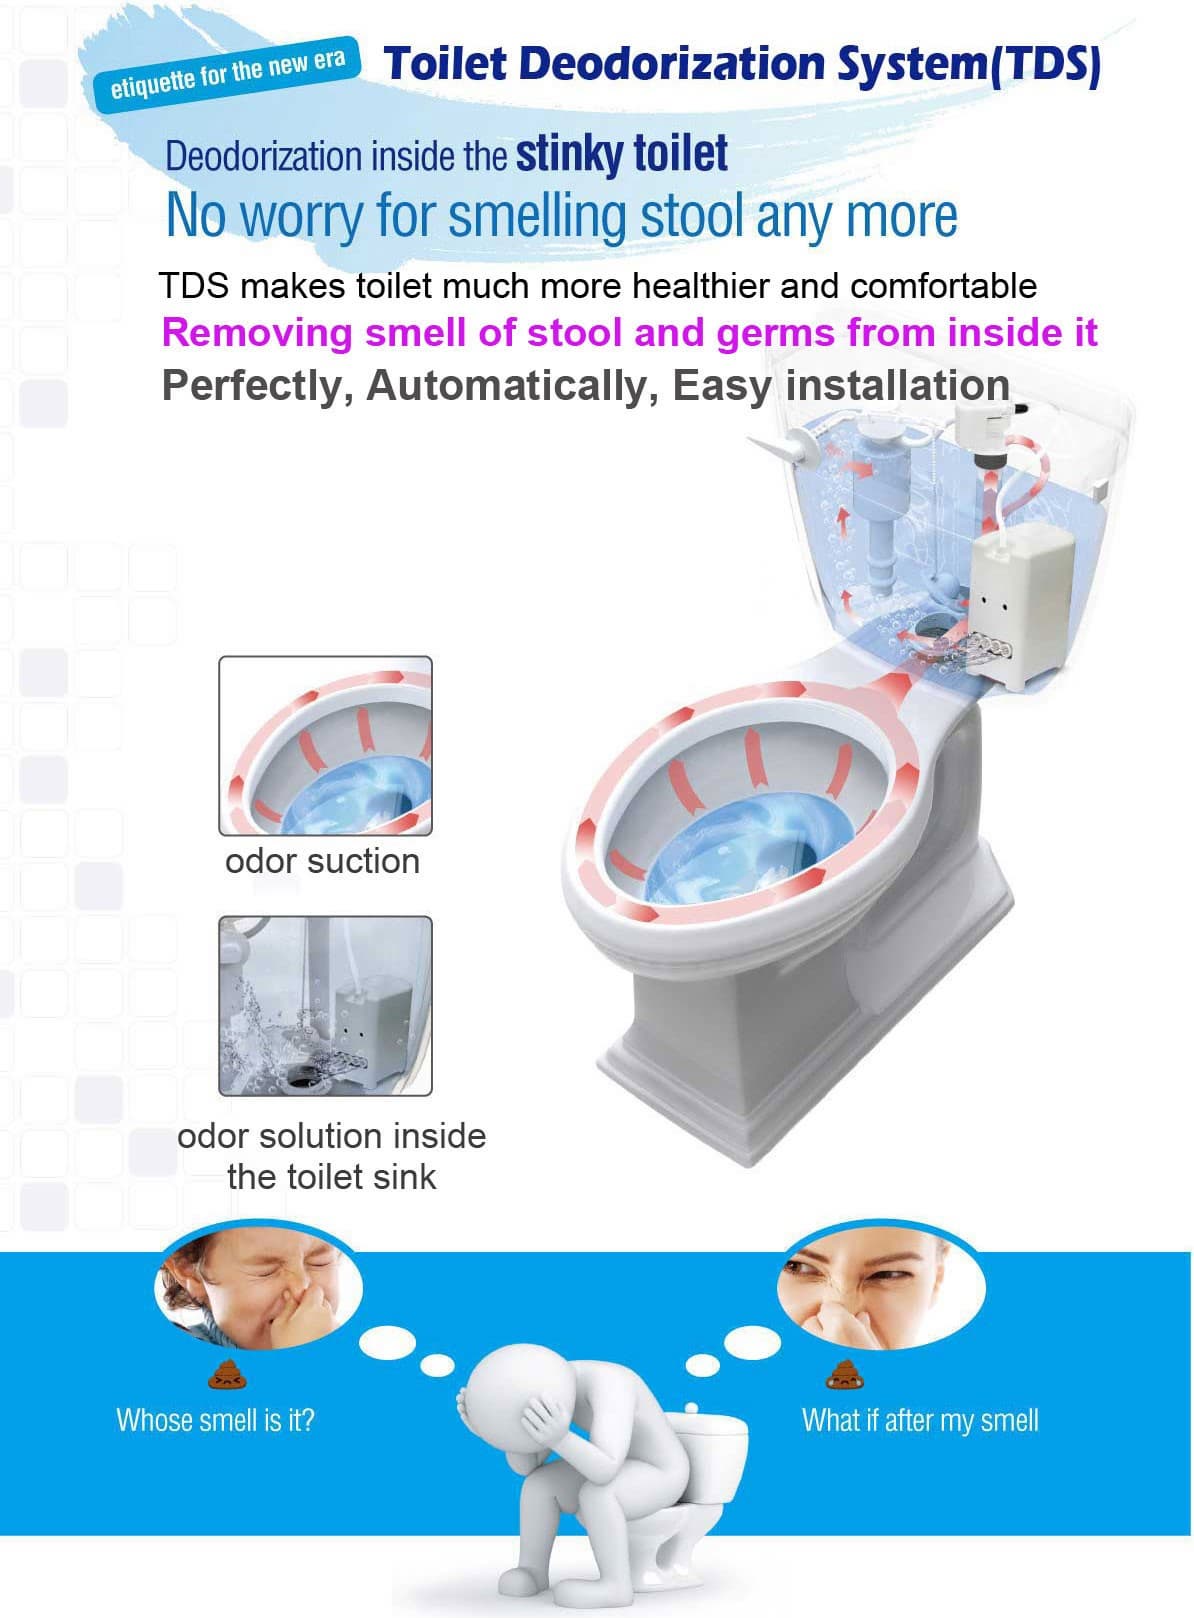 Toilet deodorization system